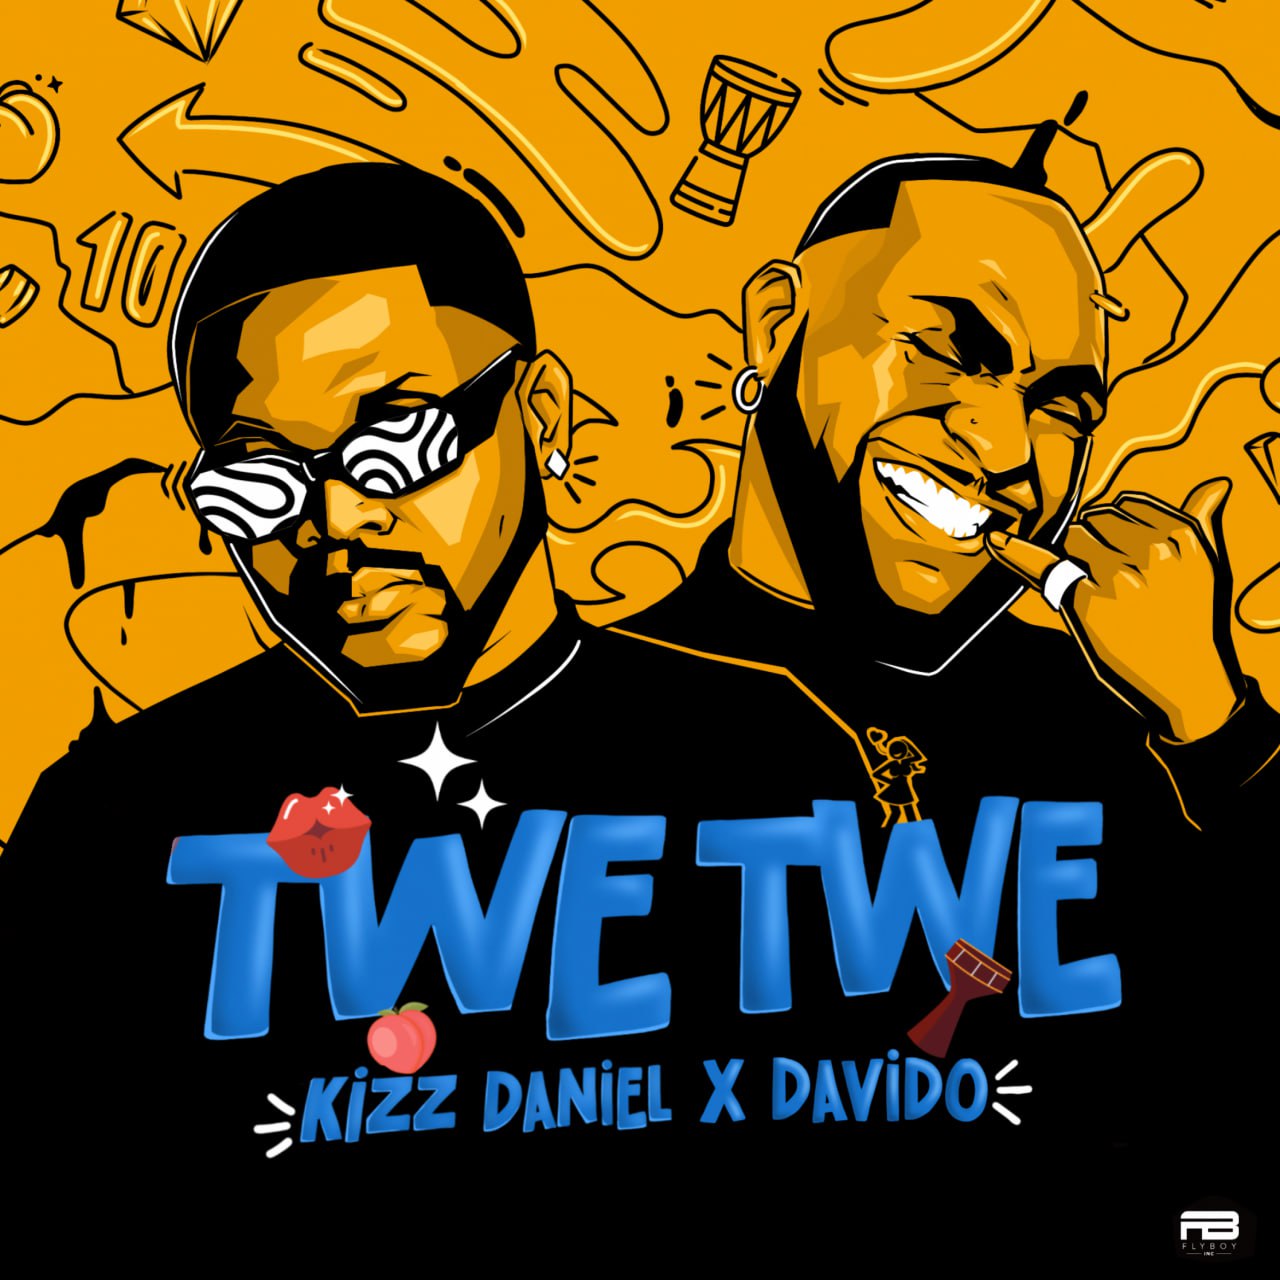 Kizz Daniel -Twe Twe (Remix) (feat. Davido)